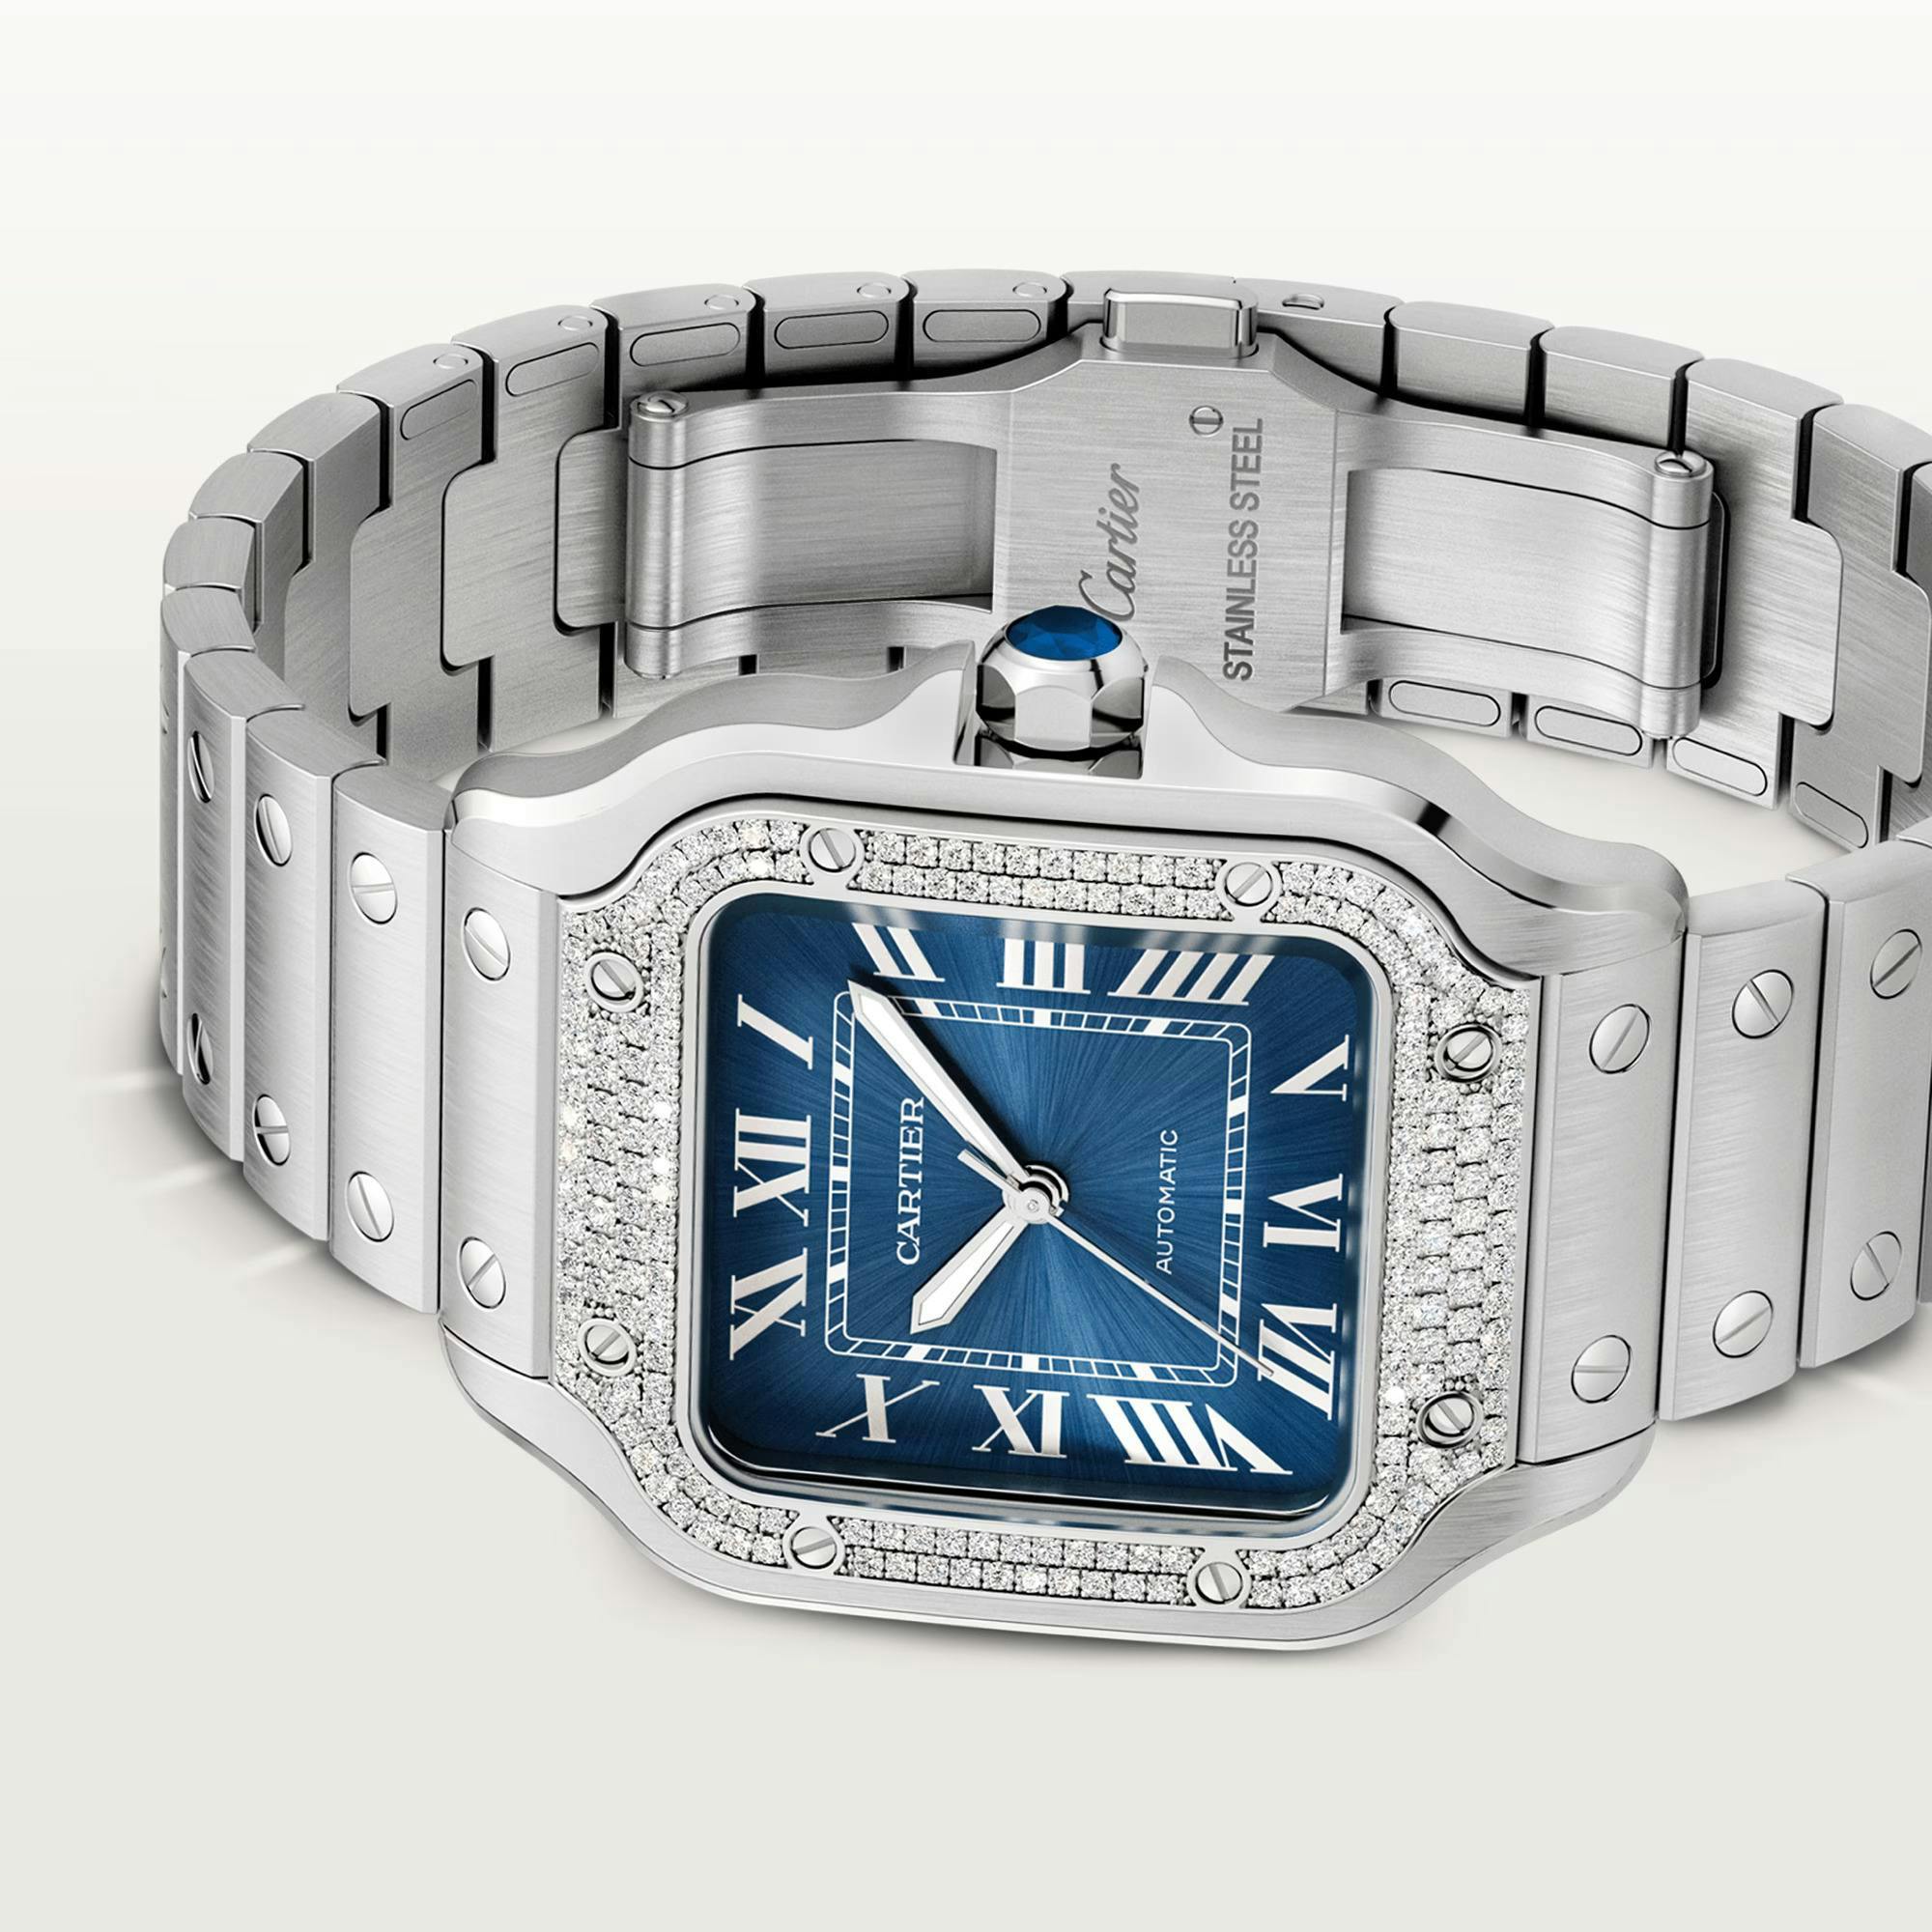 Santos de Cartier Watch with Blue Dial and Diamonds, medium model 1